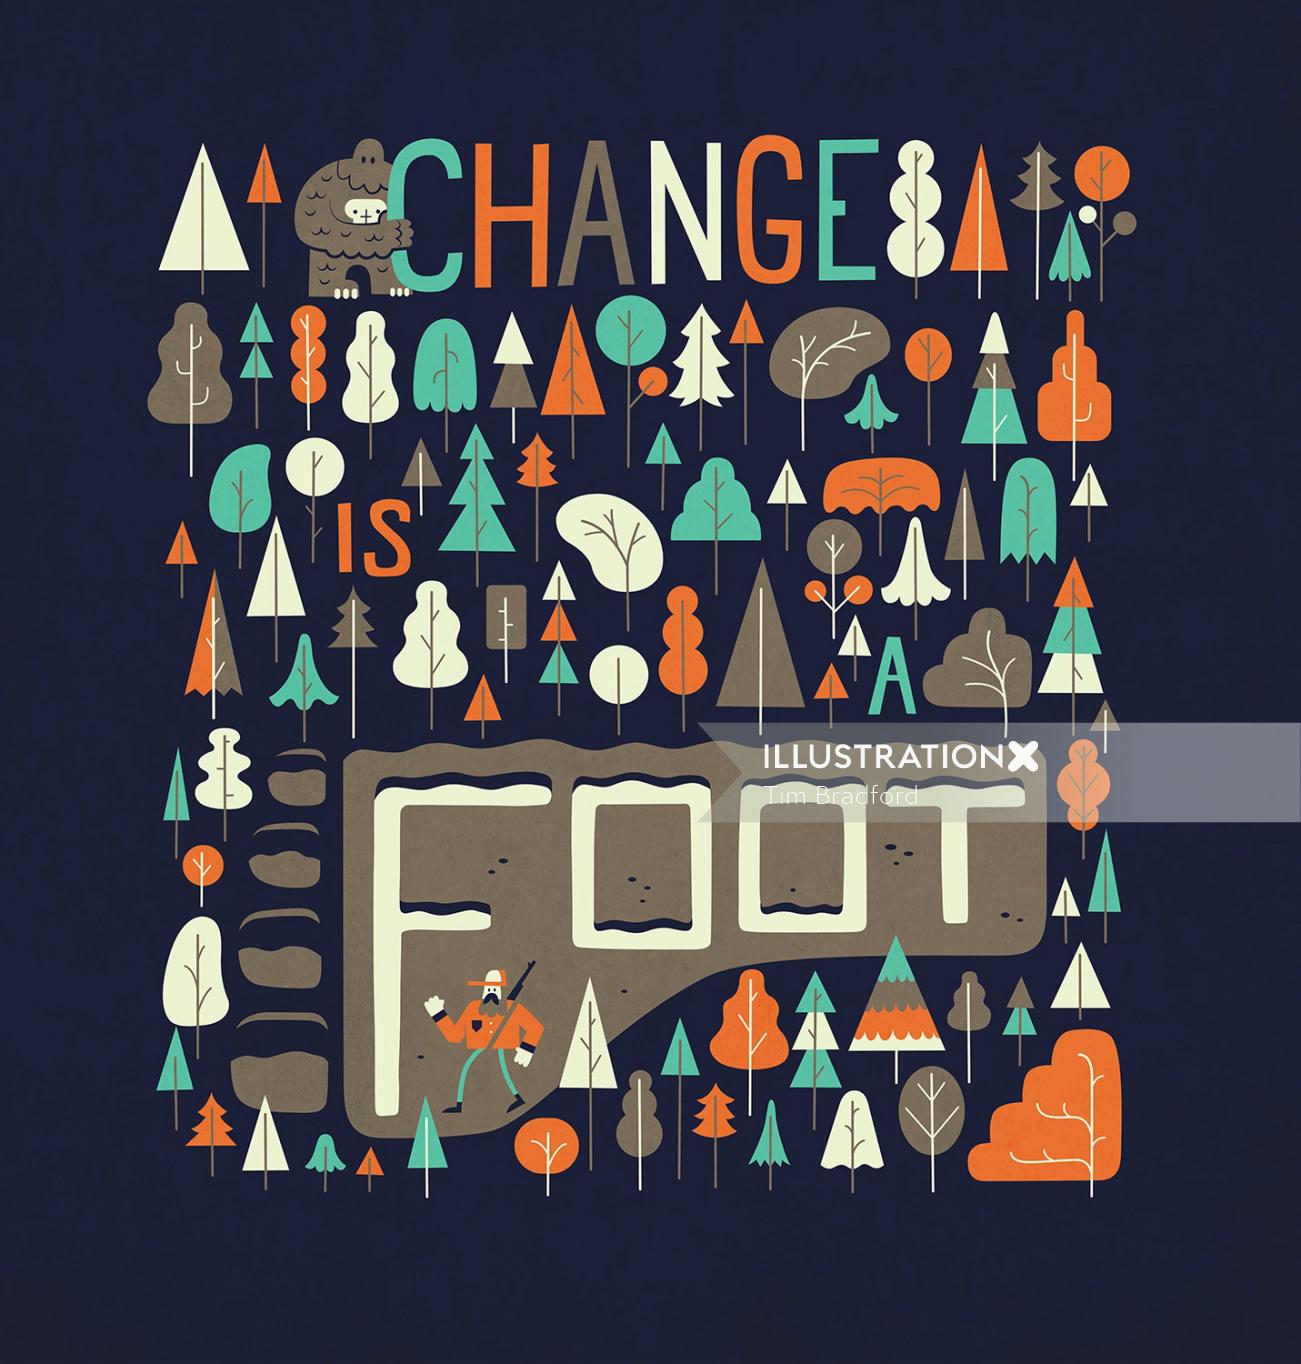 Change is foot lettering illustration by Tim Bradford